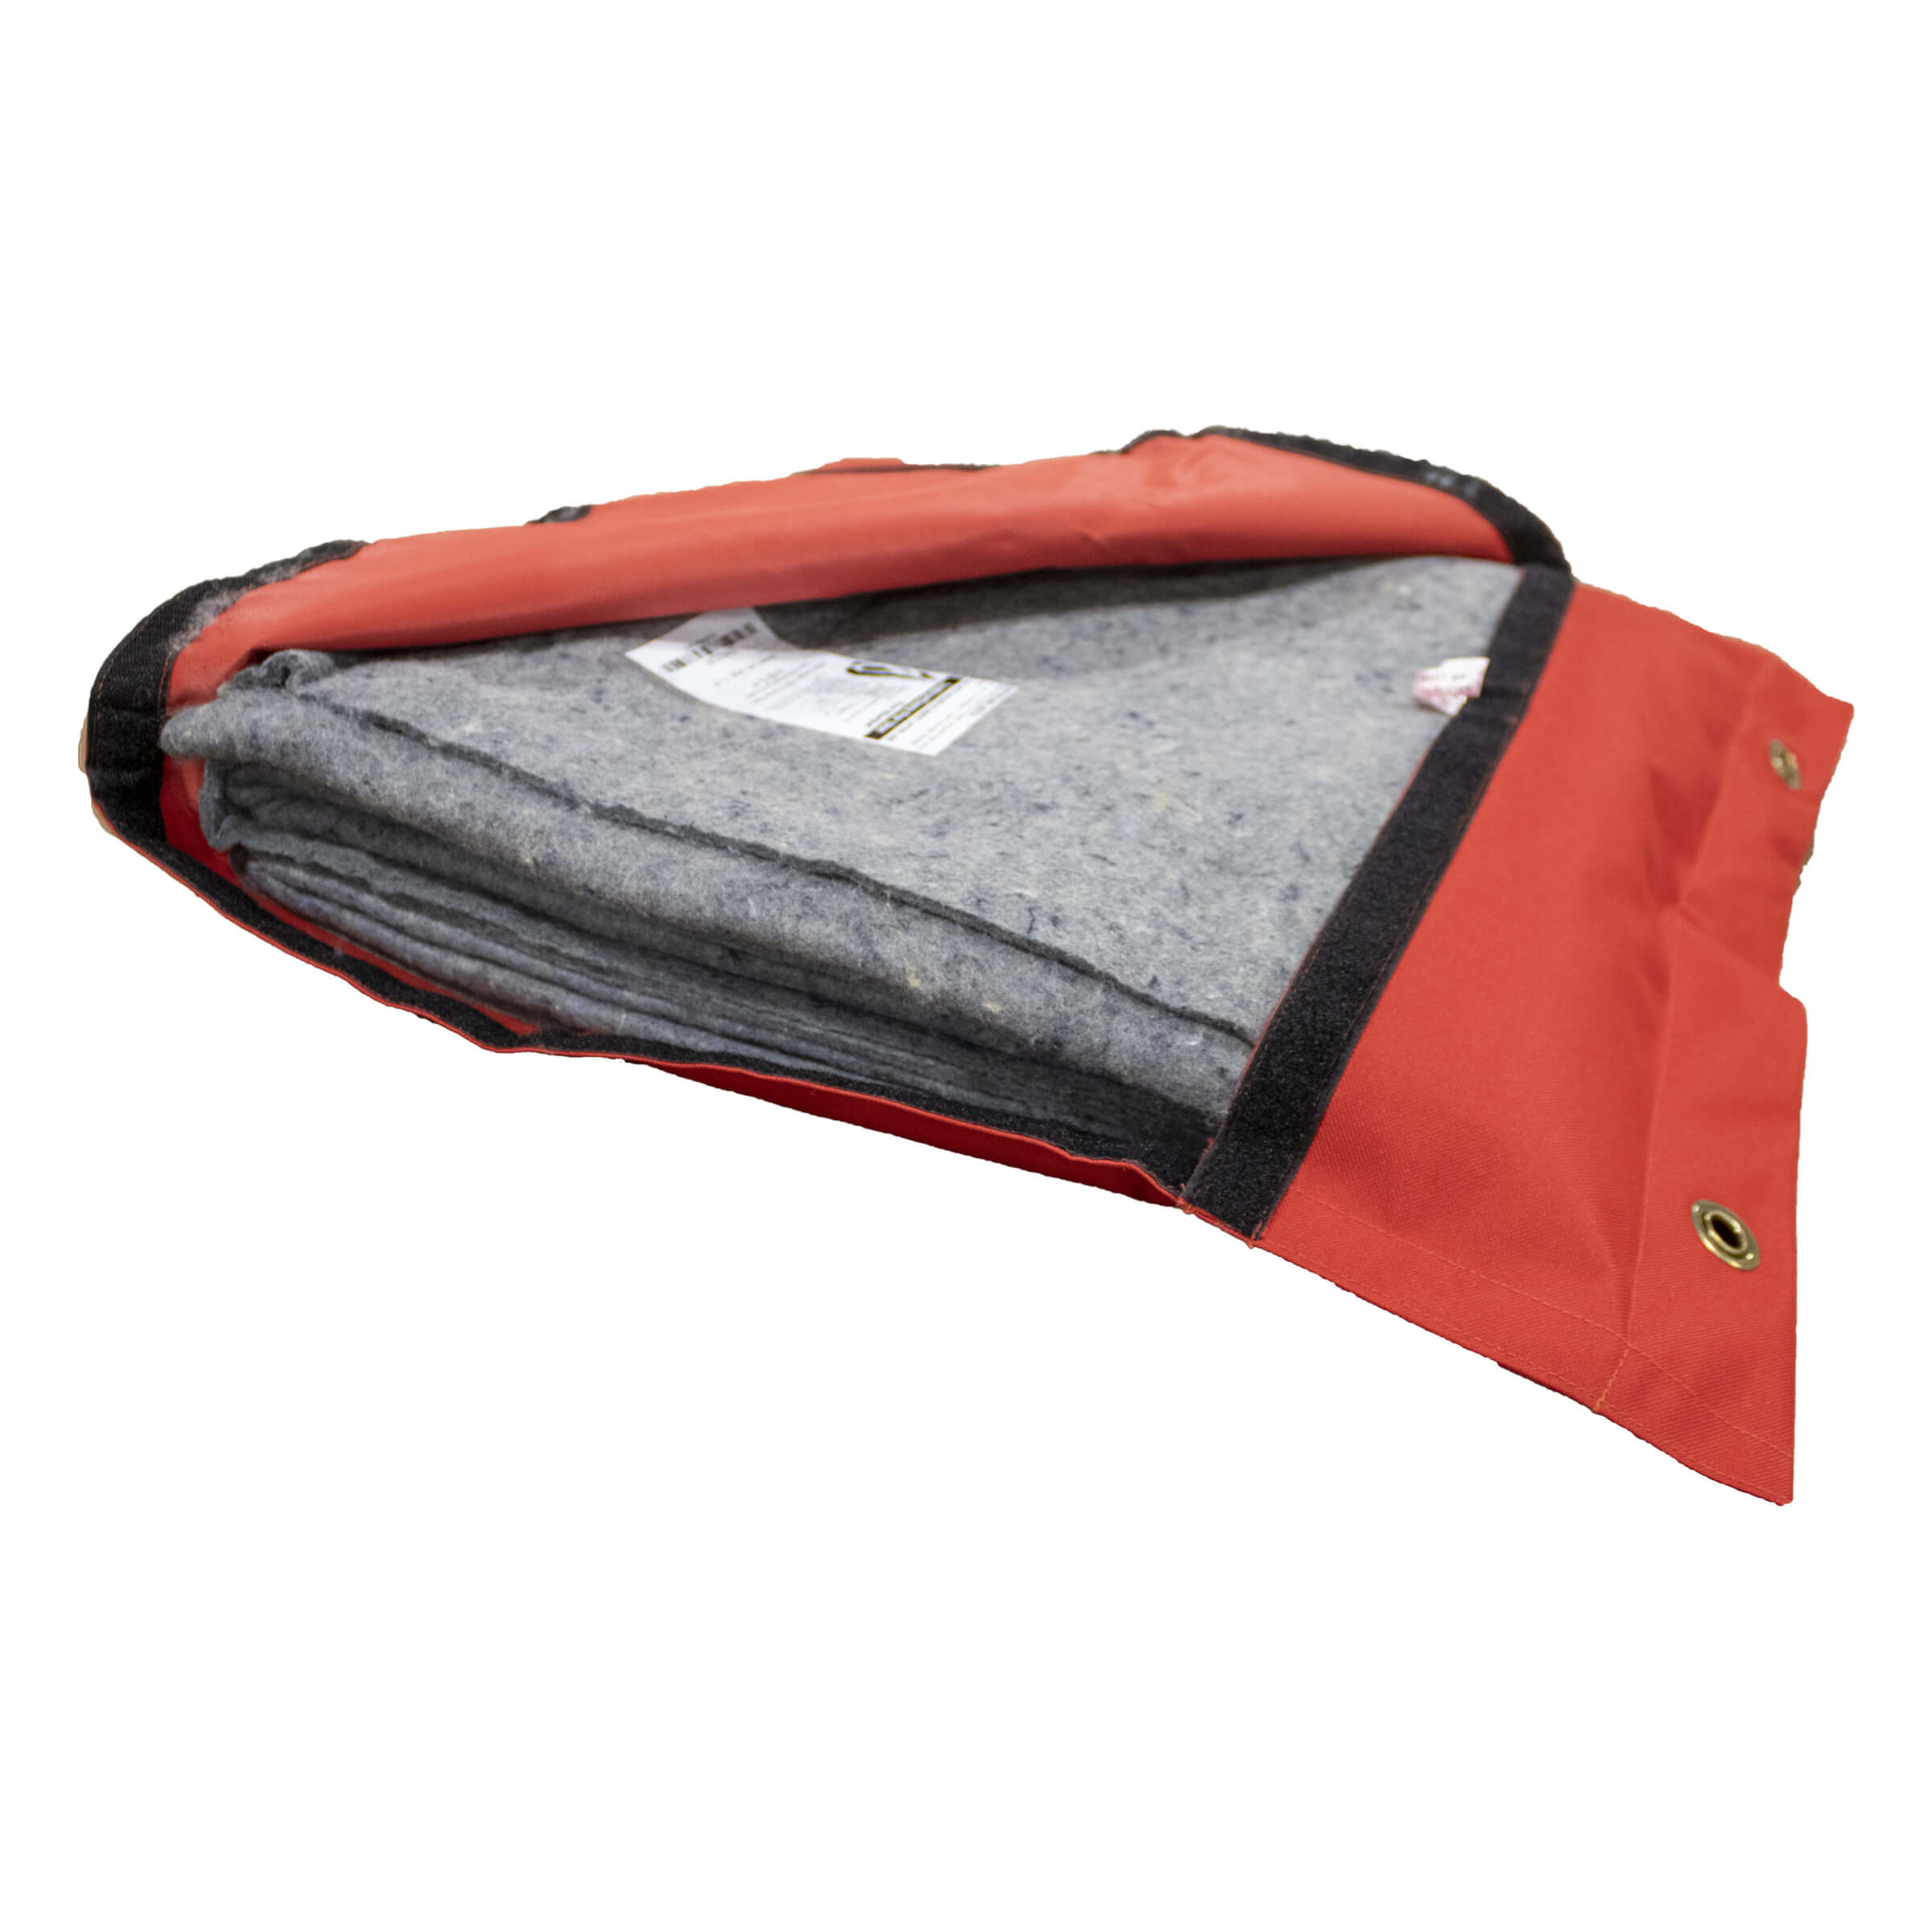 Seton Fire Blanket and Carrying Bag 911-83700 | Orange | Each